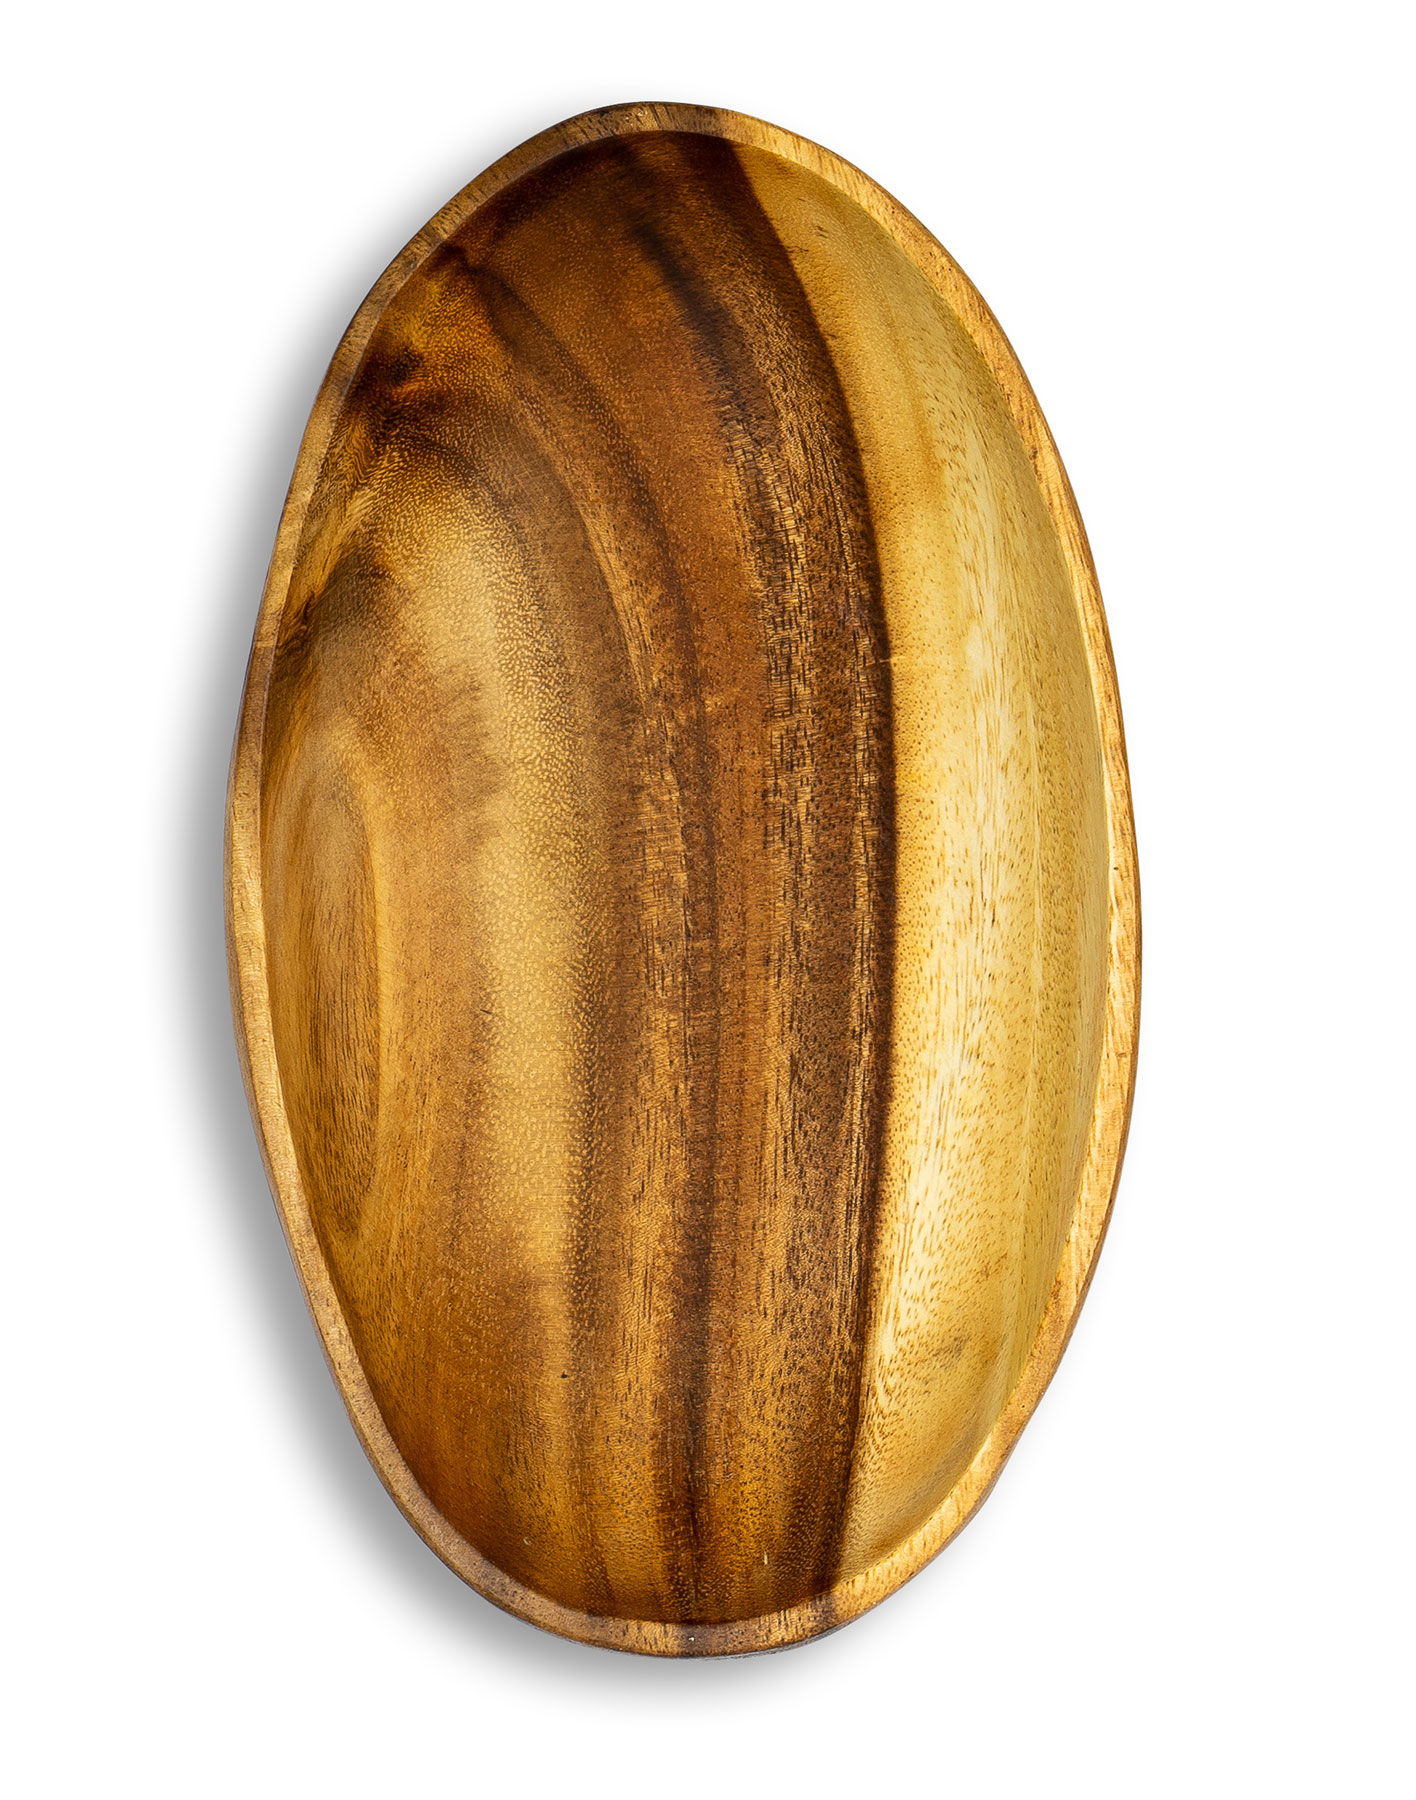 Holzschale Schüssel Akazie 25x15cm oval Schale Obstschale Tablett Holz